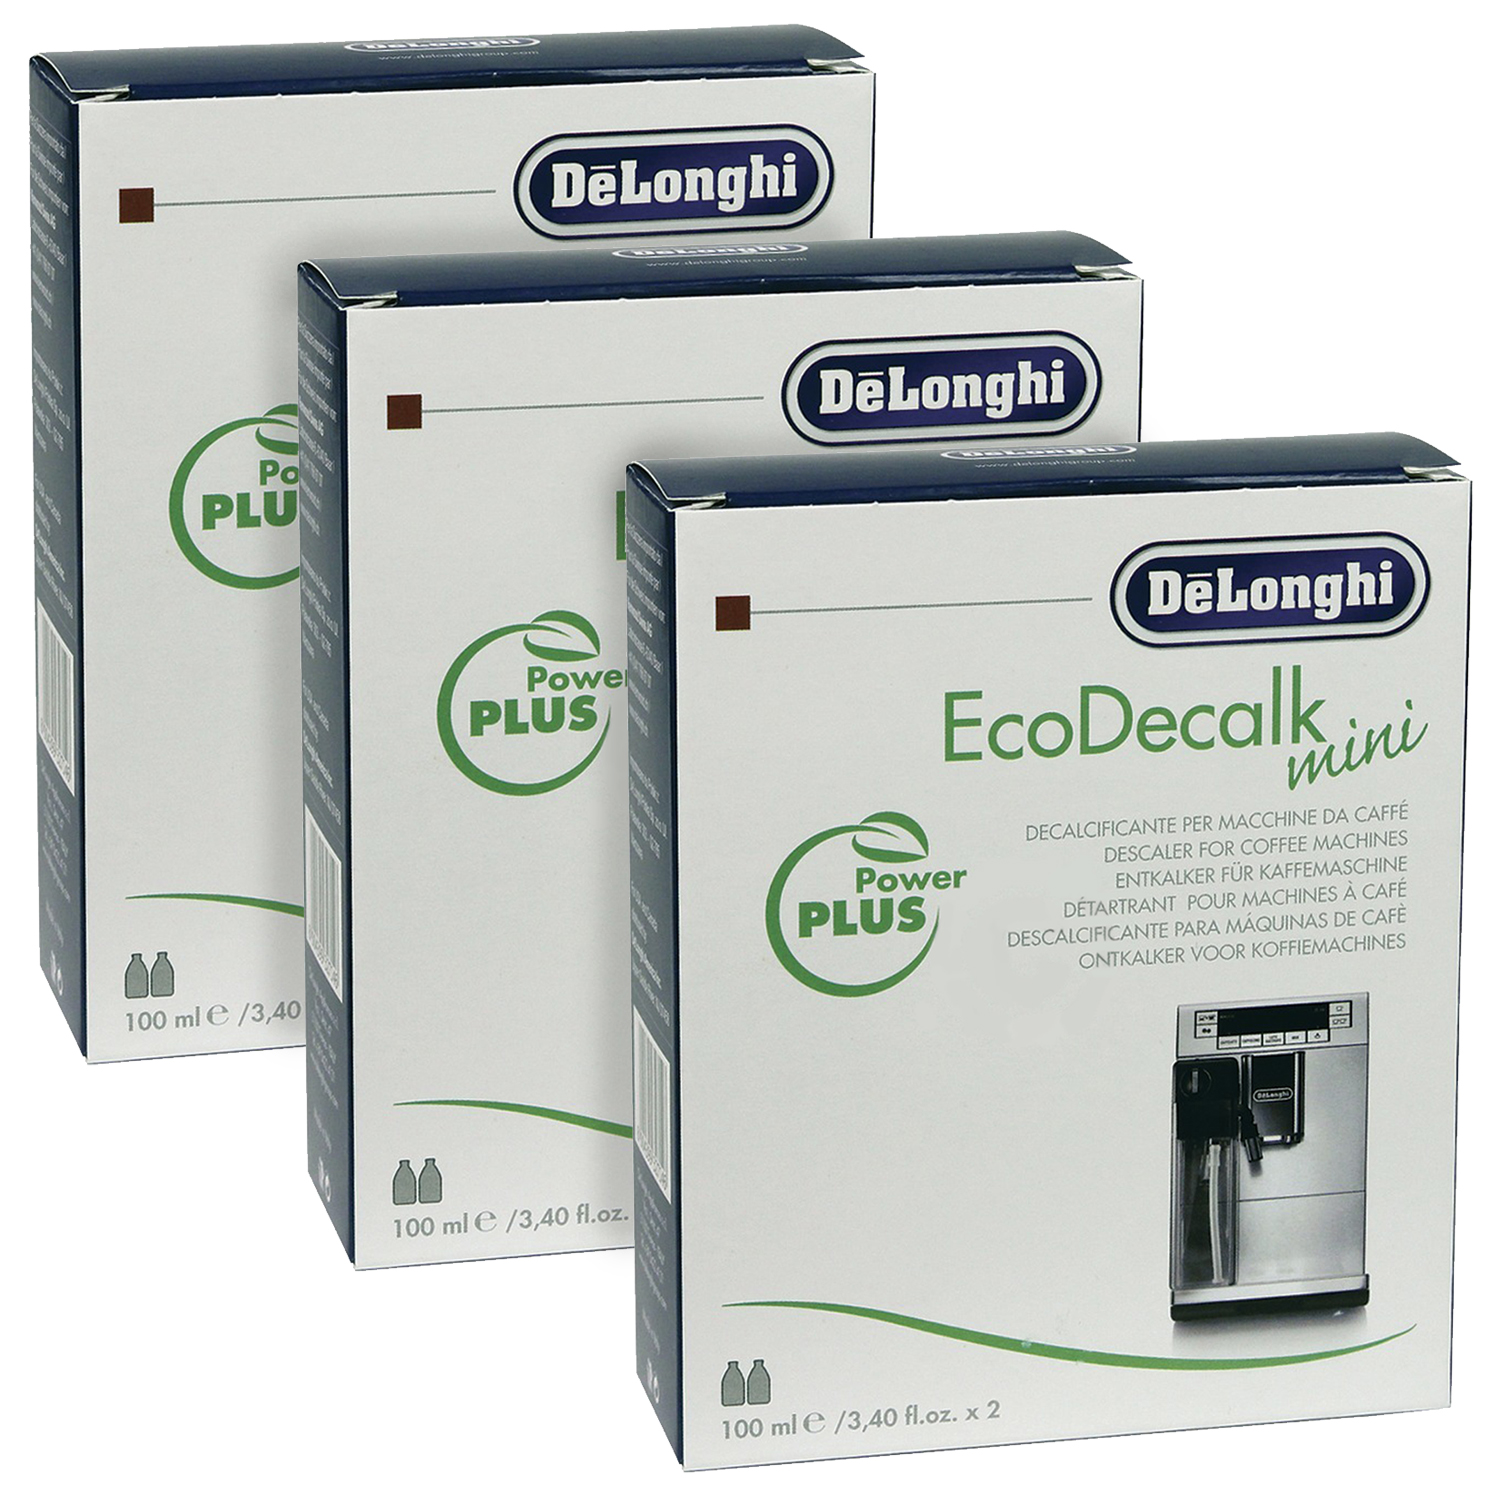 DeLonghi EcoDecalk Mini Descaler 2x100ml - 5513296011